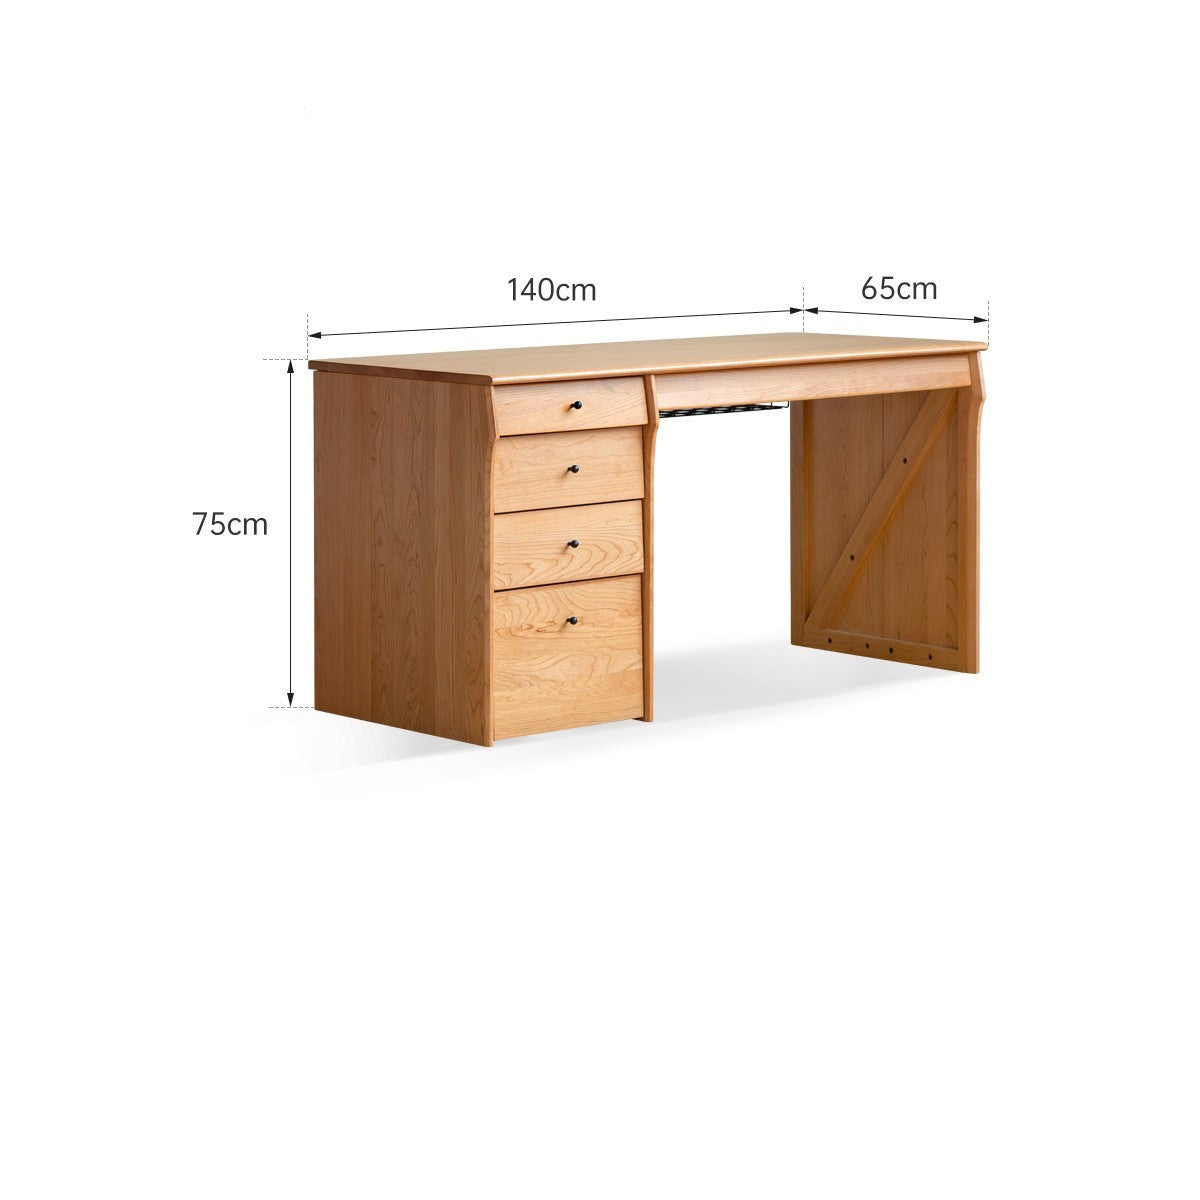 Cherry Wood Desk and Bookshelf Integrated Office Desk)